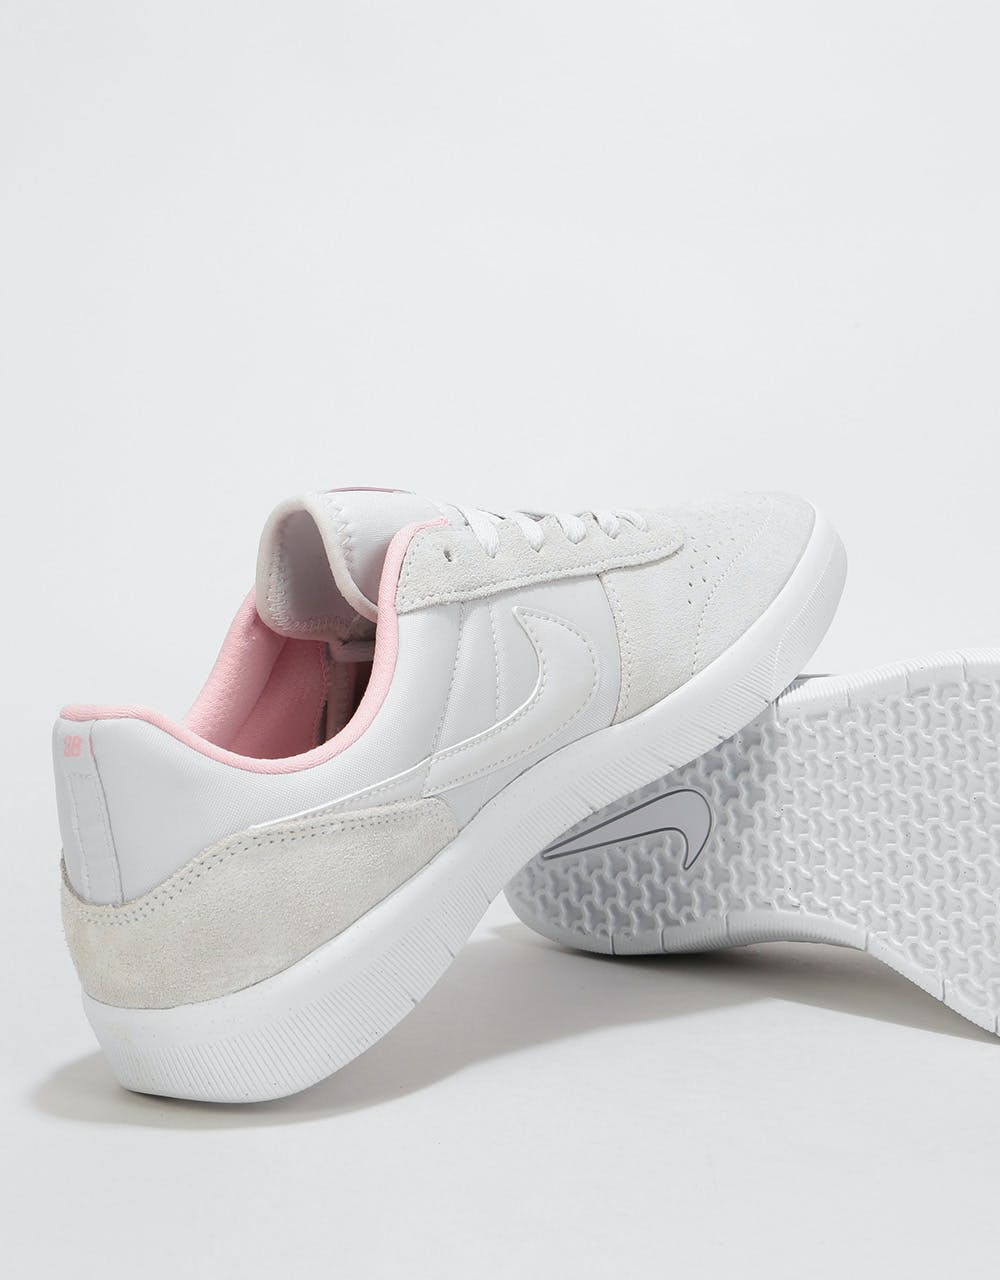 Nike SB Team Classic Skate Shoes - Vast Grey/Vast Grey-White-Bubblegum